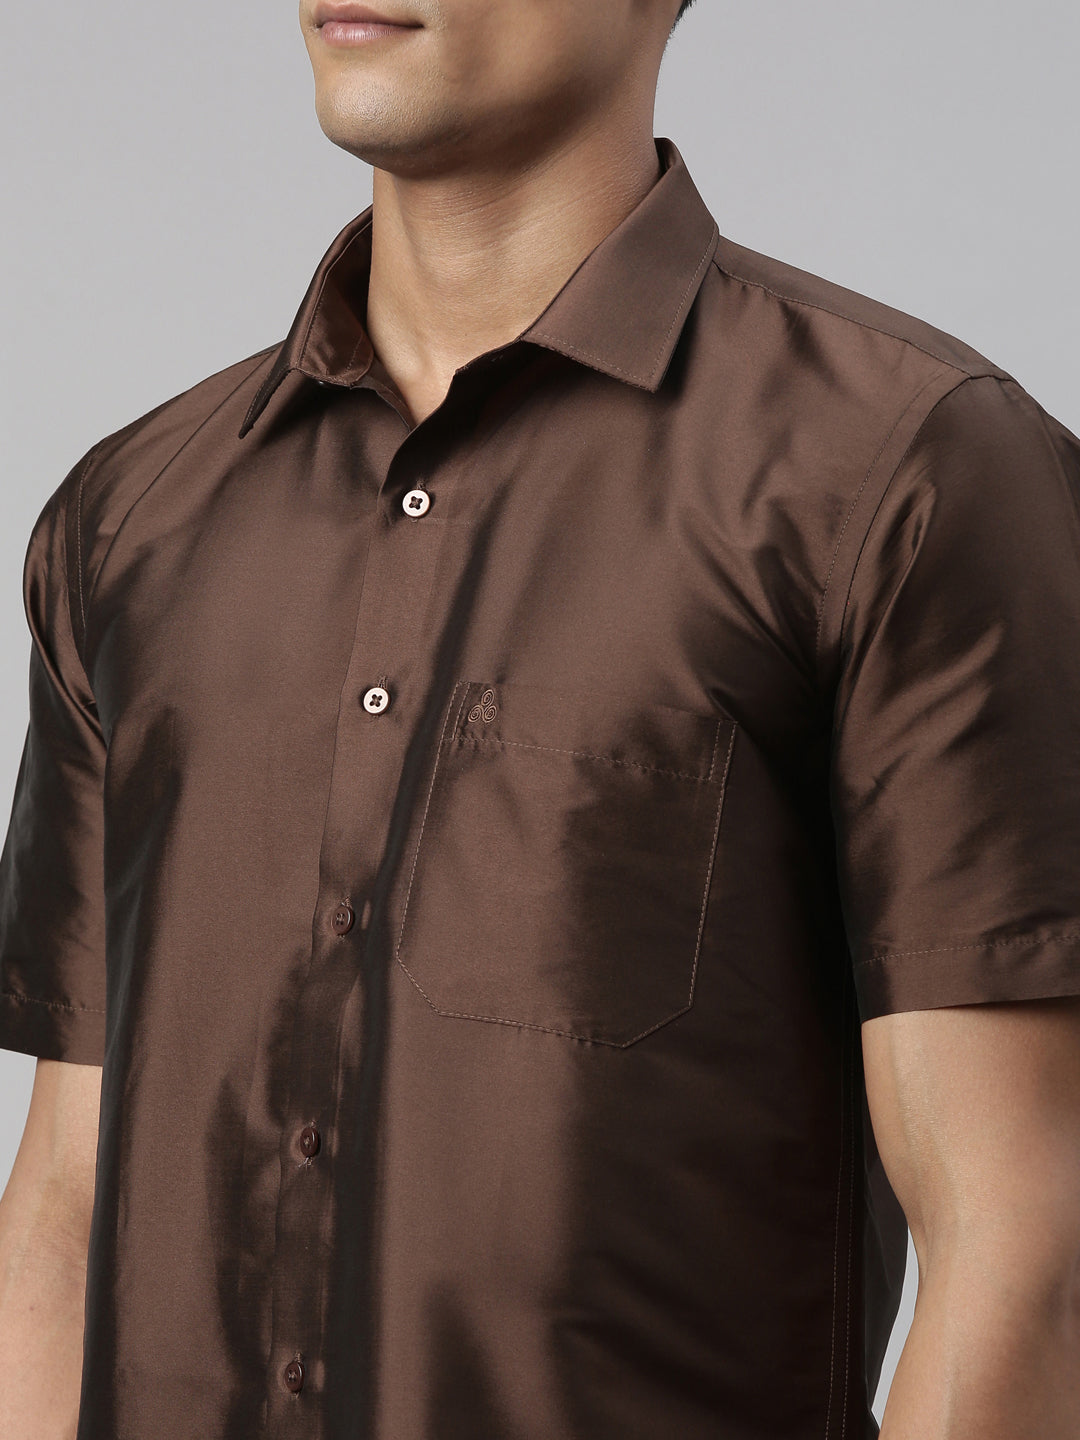 Tattva Mens Coffee Colour Half sleeve Shirt